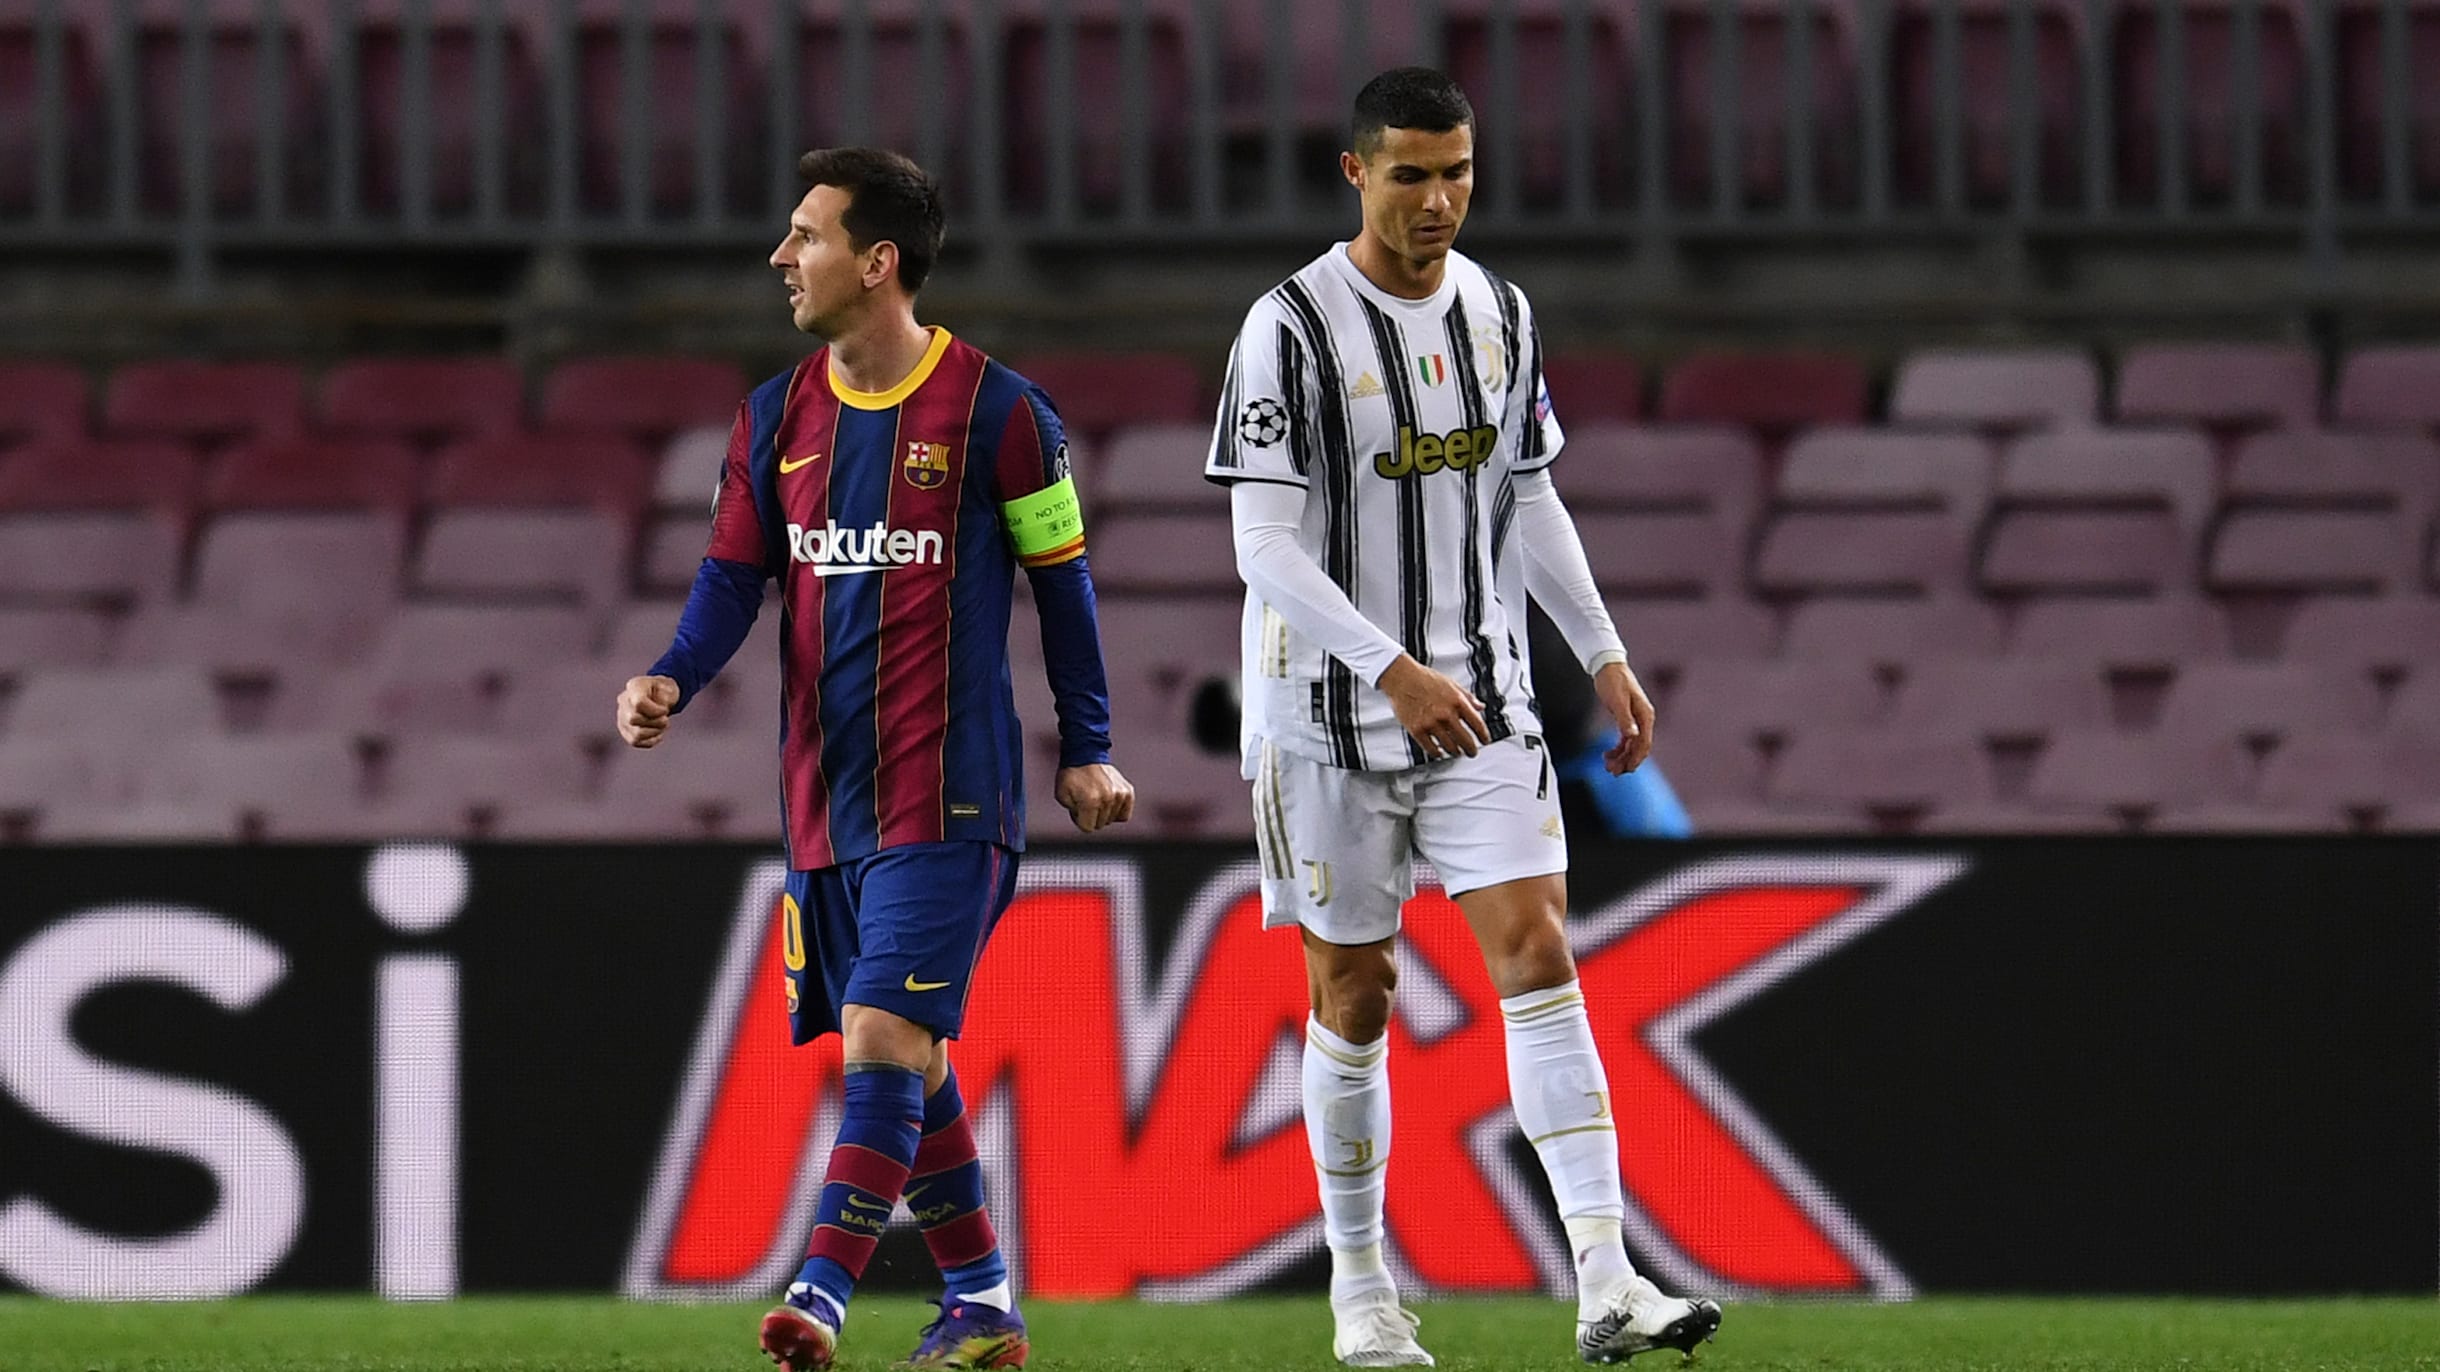 Lionel Messi vs Cristiano Ronaldo How to watch PSG take on a Riyadh All-Star XI from Saudi Arabia